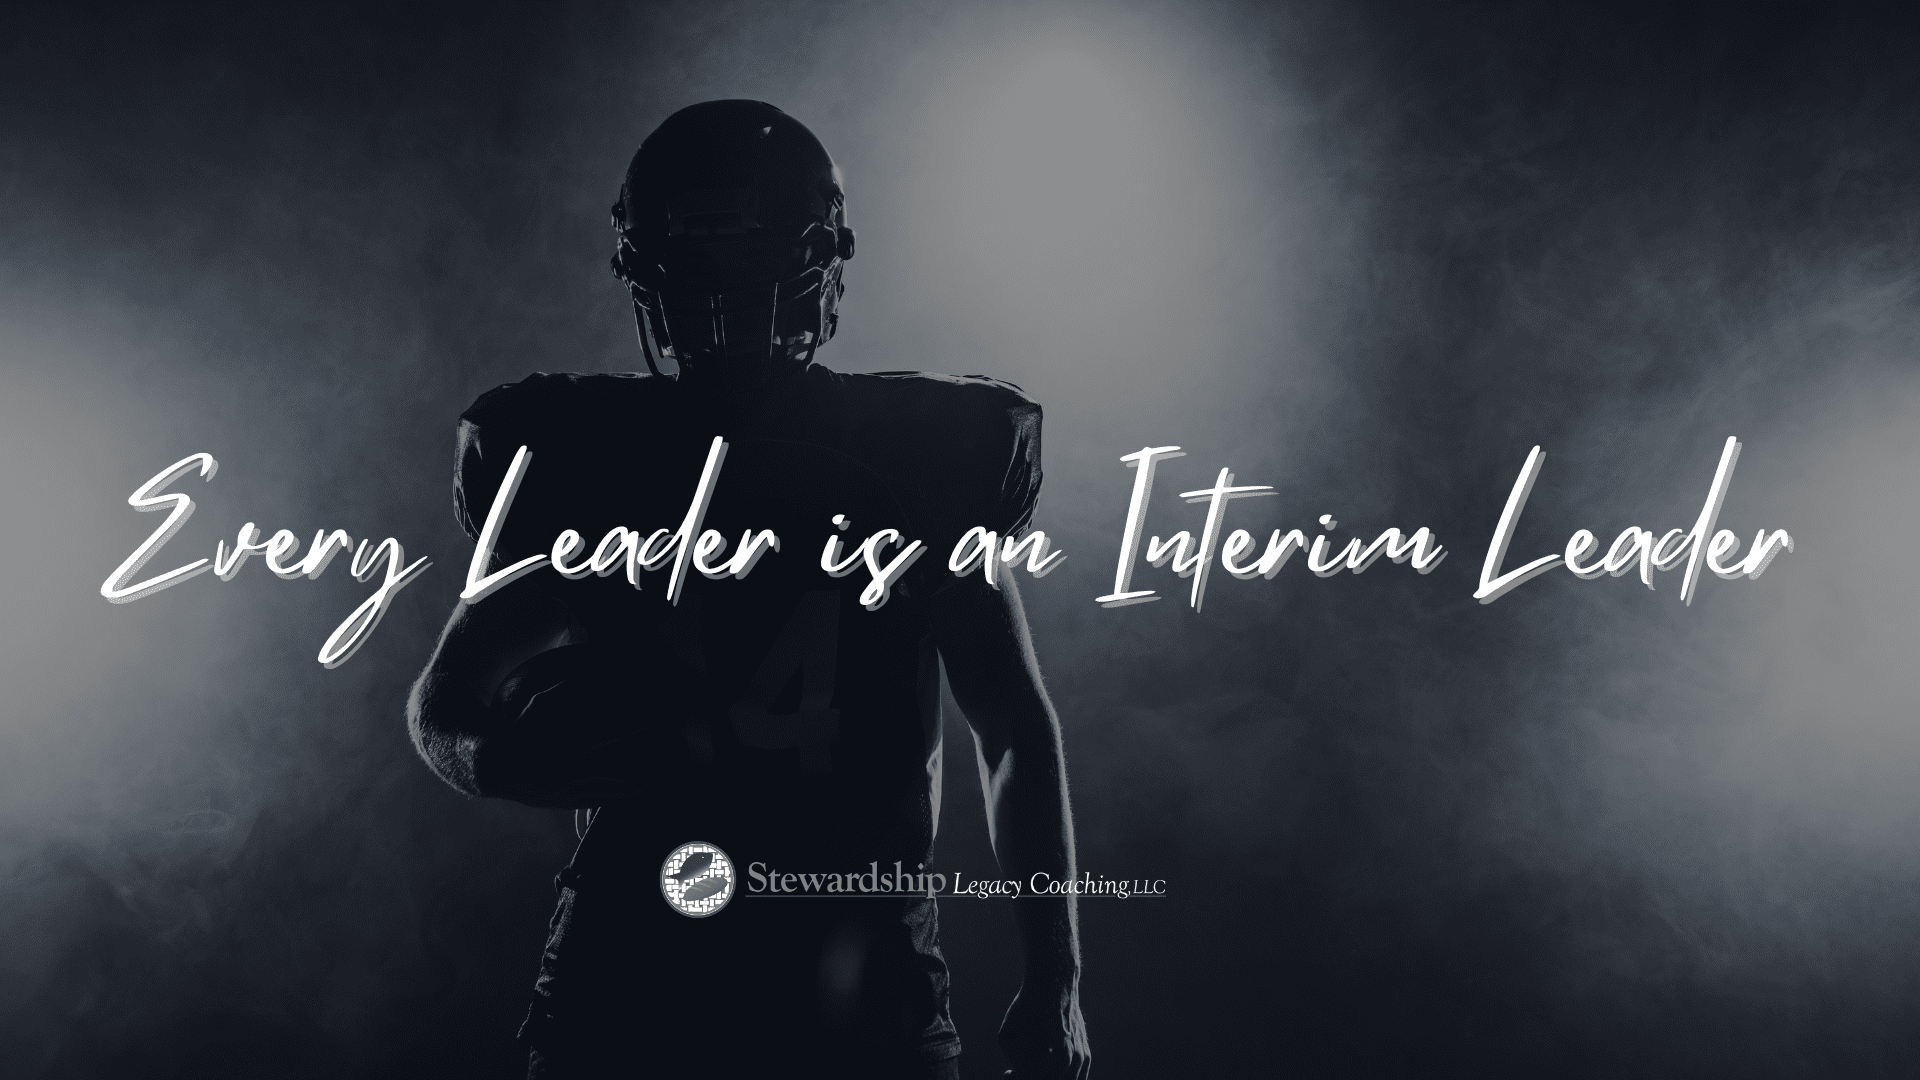 Every leader is an interim leader